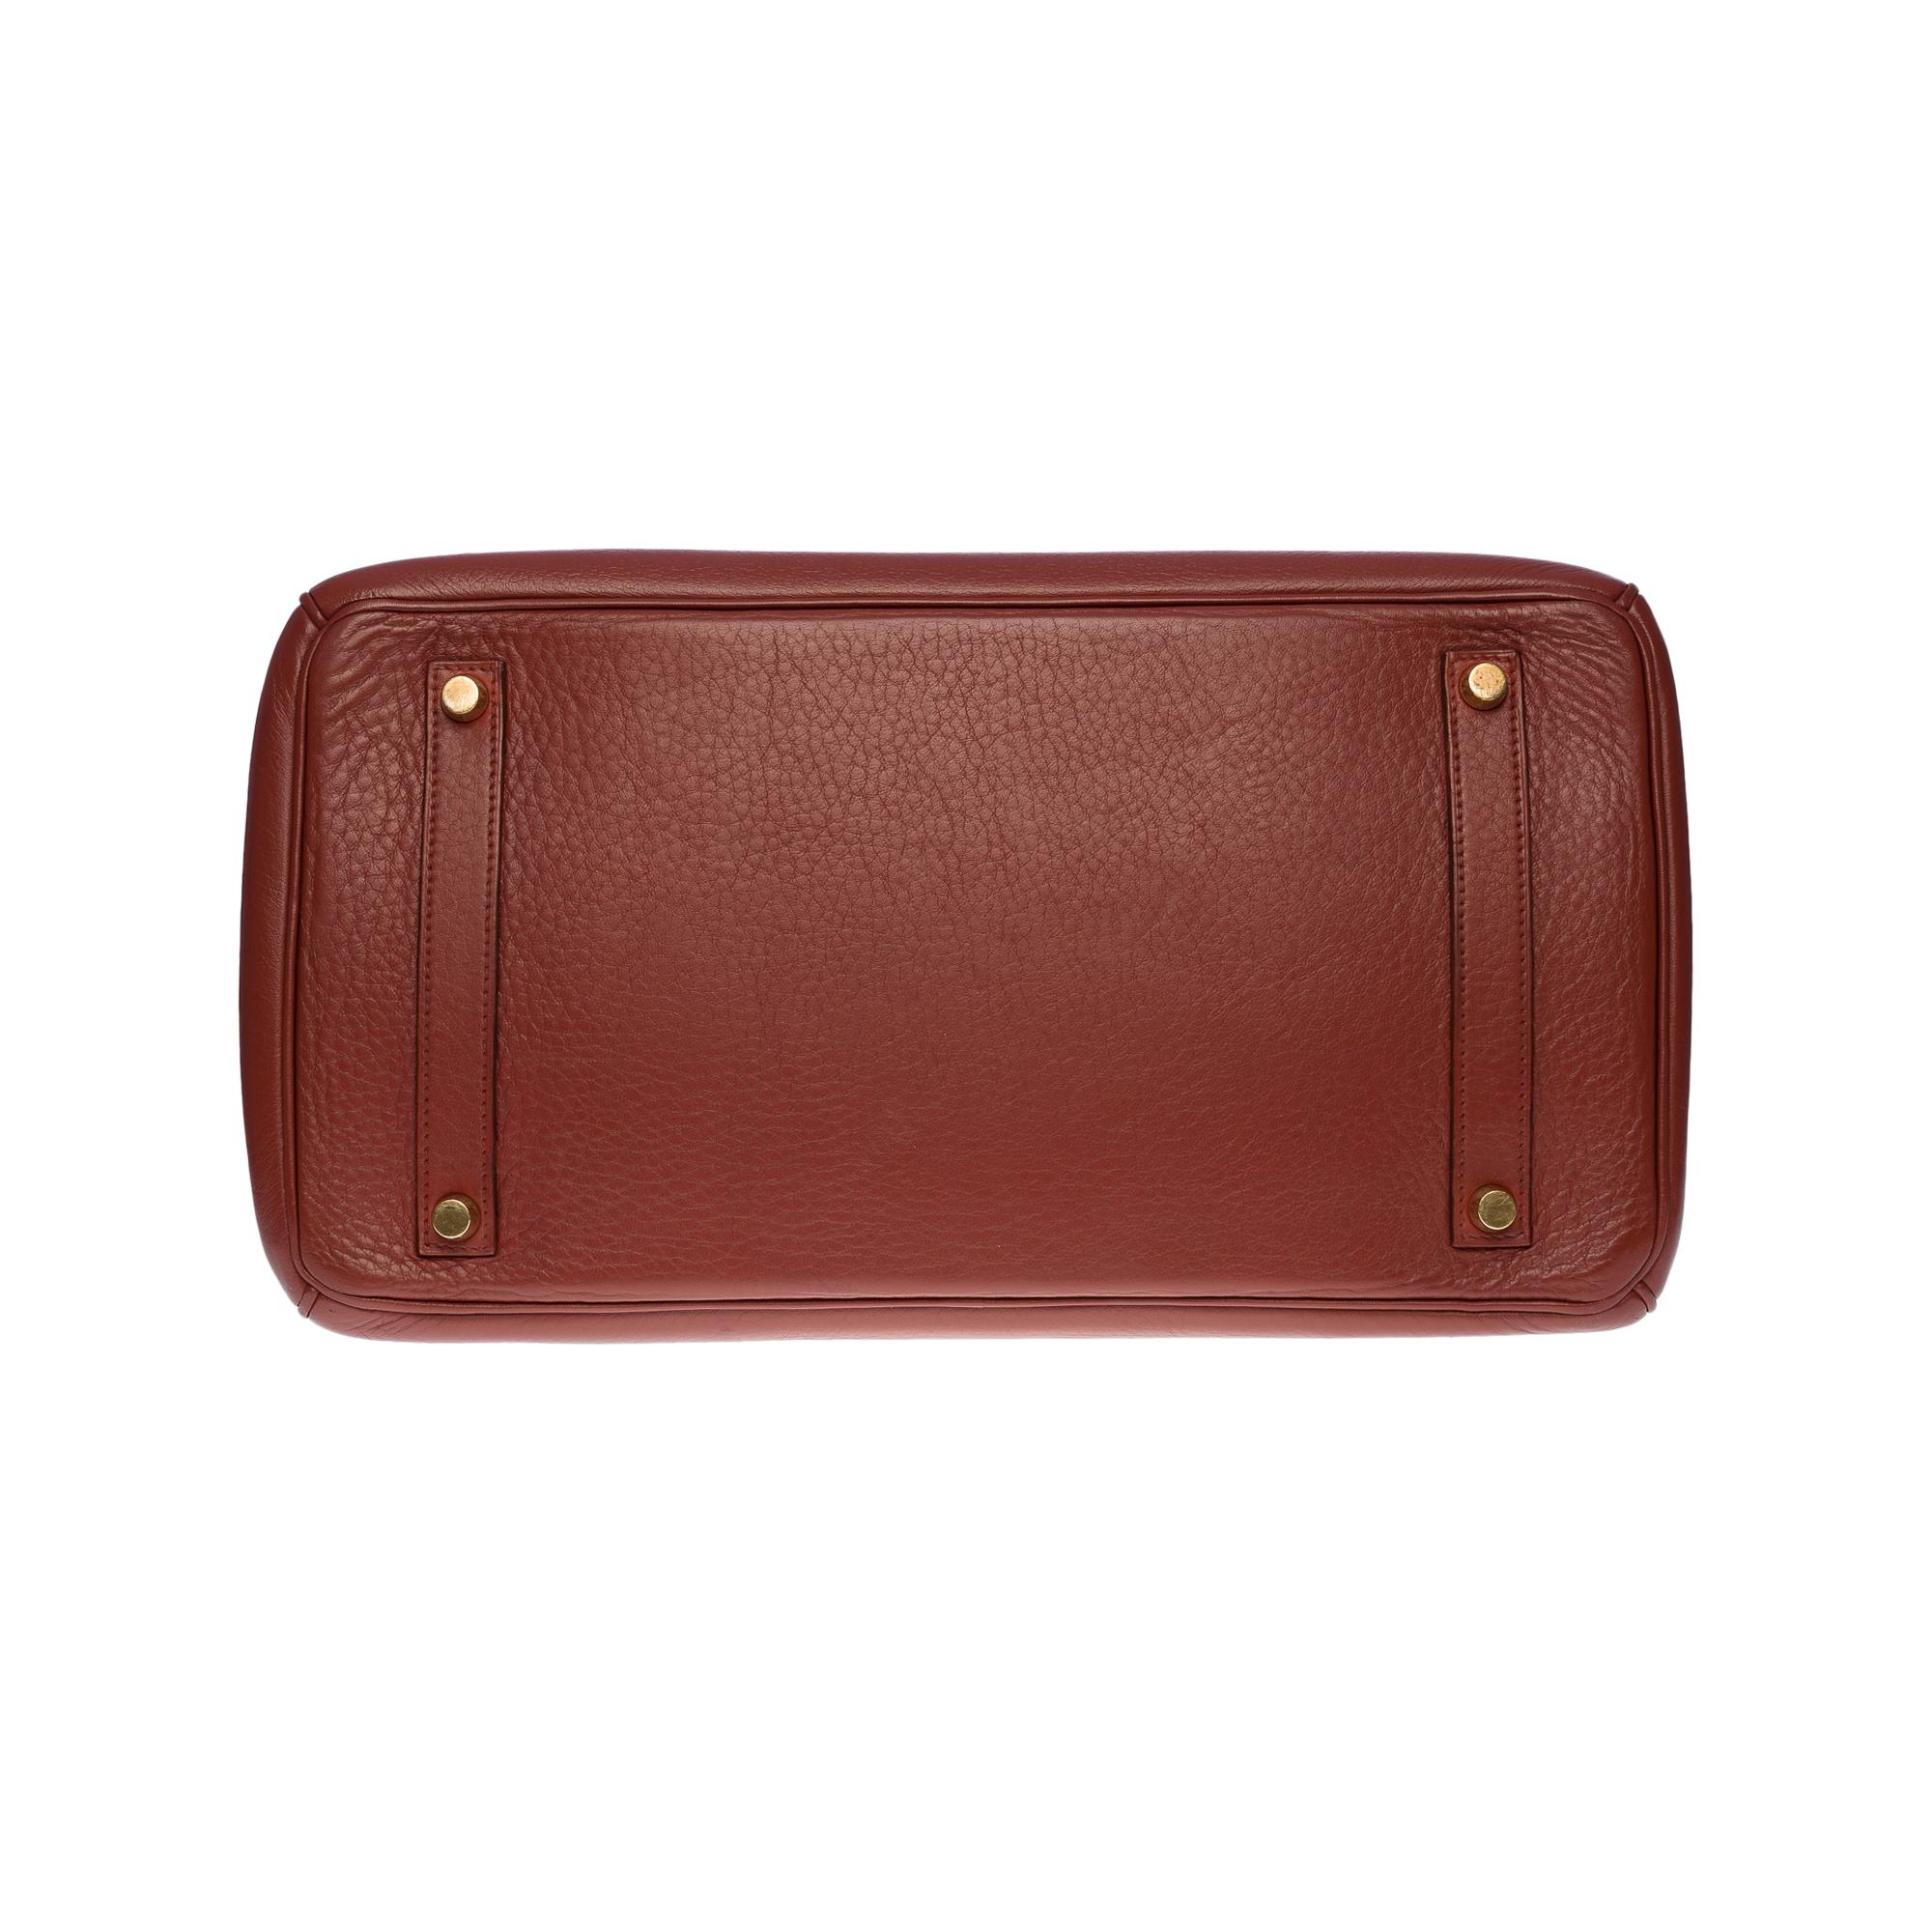 Amazing Hermès Birkin 35 handbag in Cognac Togo leather, GHW 2